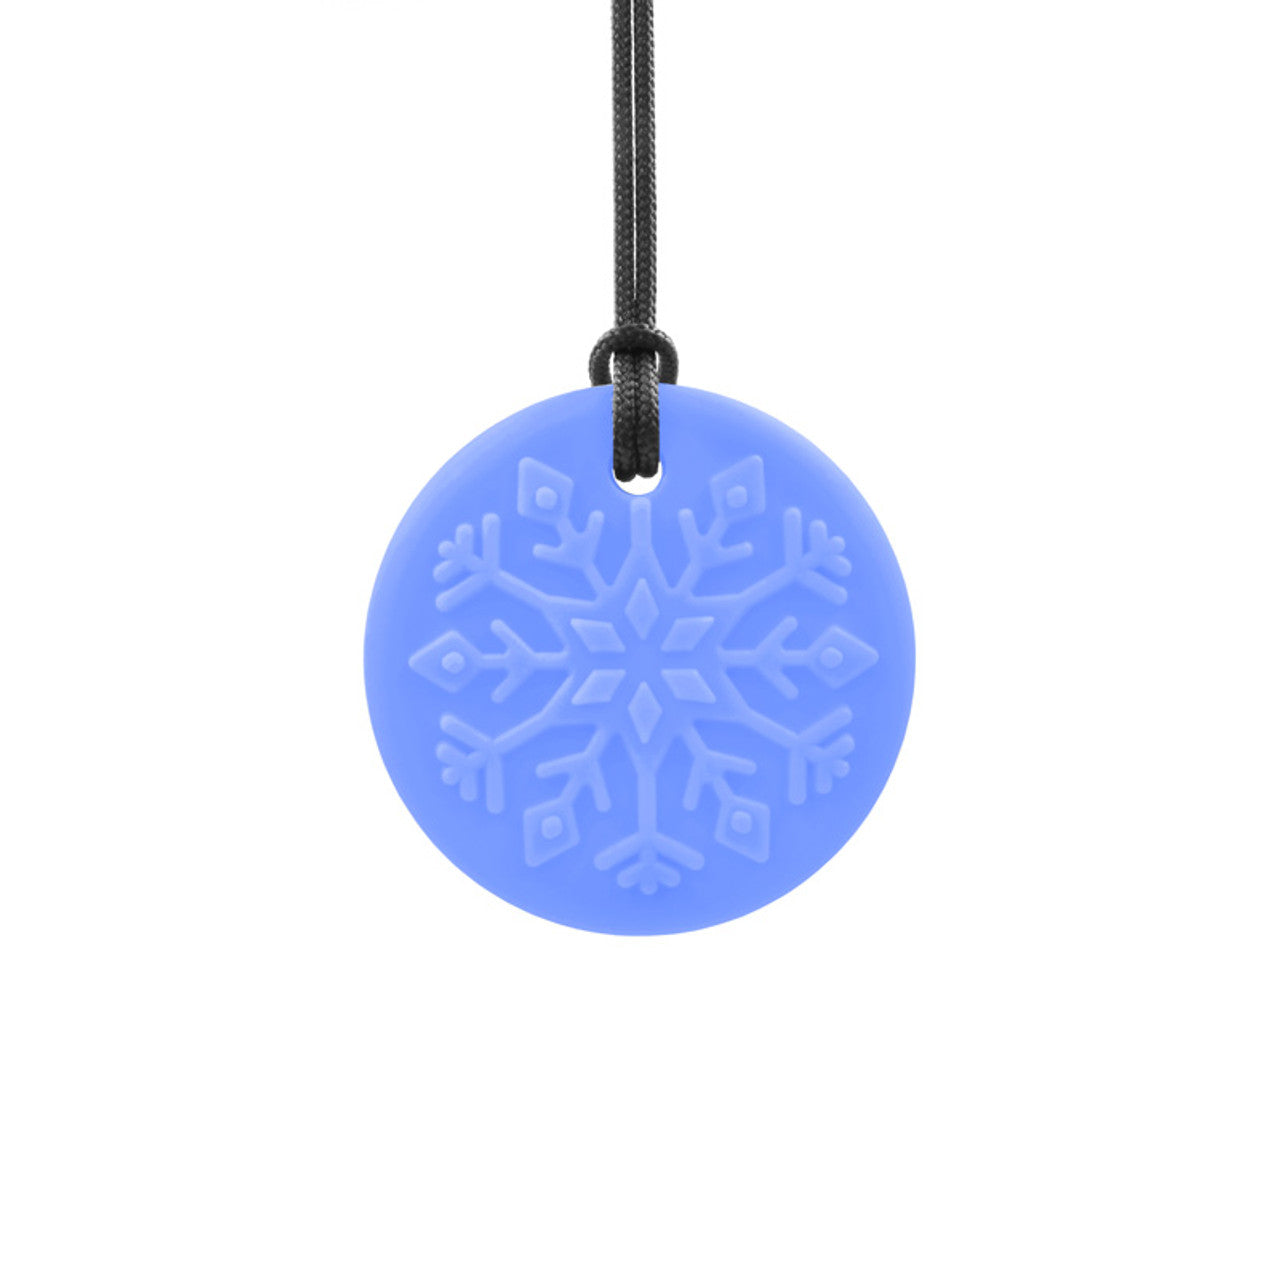 ARK_s_Blizzard_Bite_Chewable_Snowflake_Pendant_Jewelry_Translucent_blue